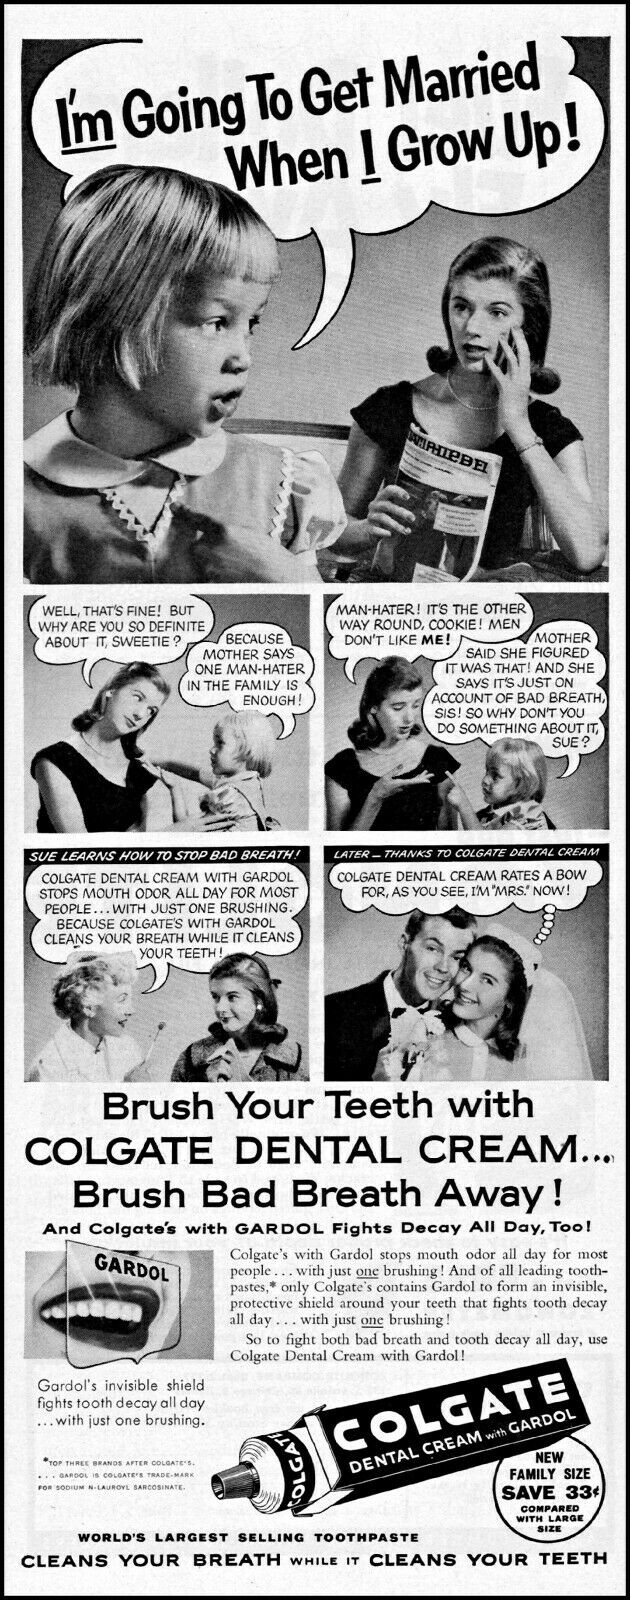 1957 Girls Getting Married Colgate Dental Dream Vintage 5 Photo Print Ad Adl55